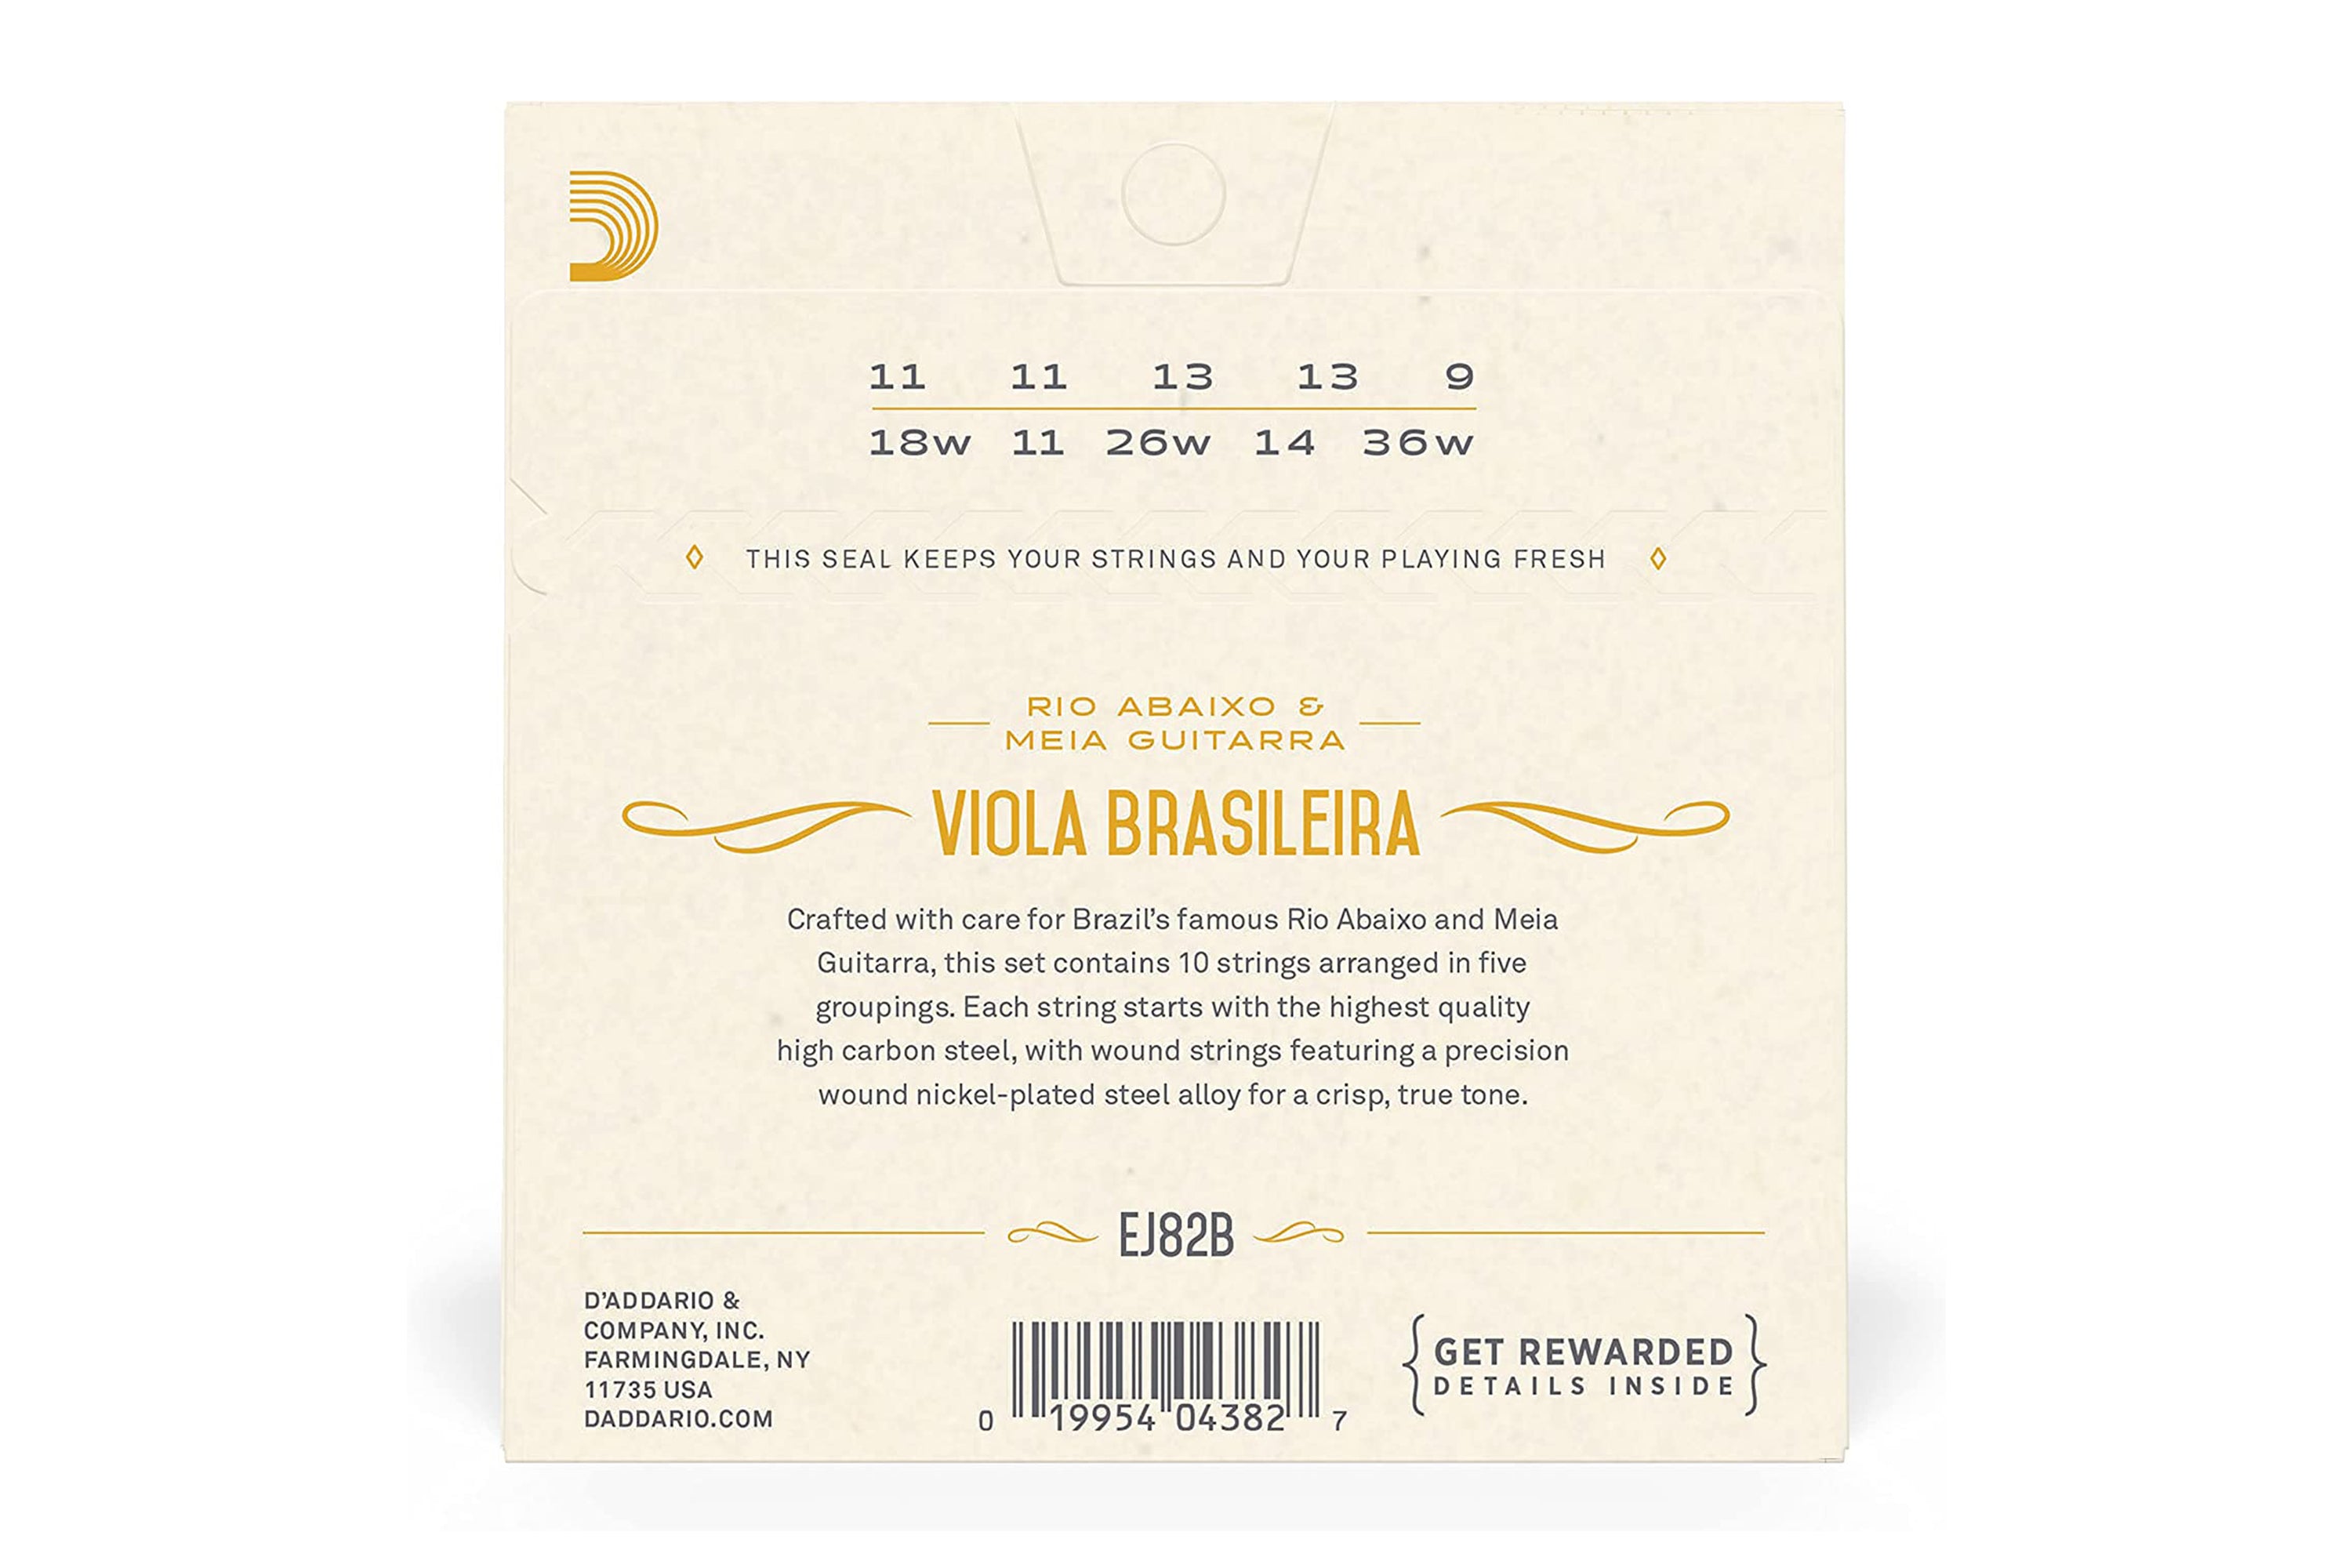 D'Addario EJ82B Nickel-Plated Steel 10-String Viola Brasileira Strings - Ball End .011-.014 Rio Abaixo and Meia Guitarra